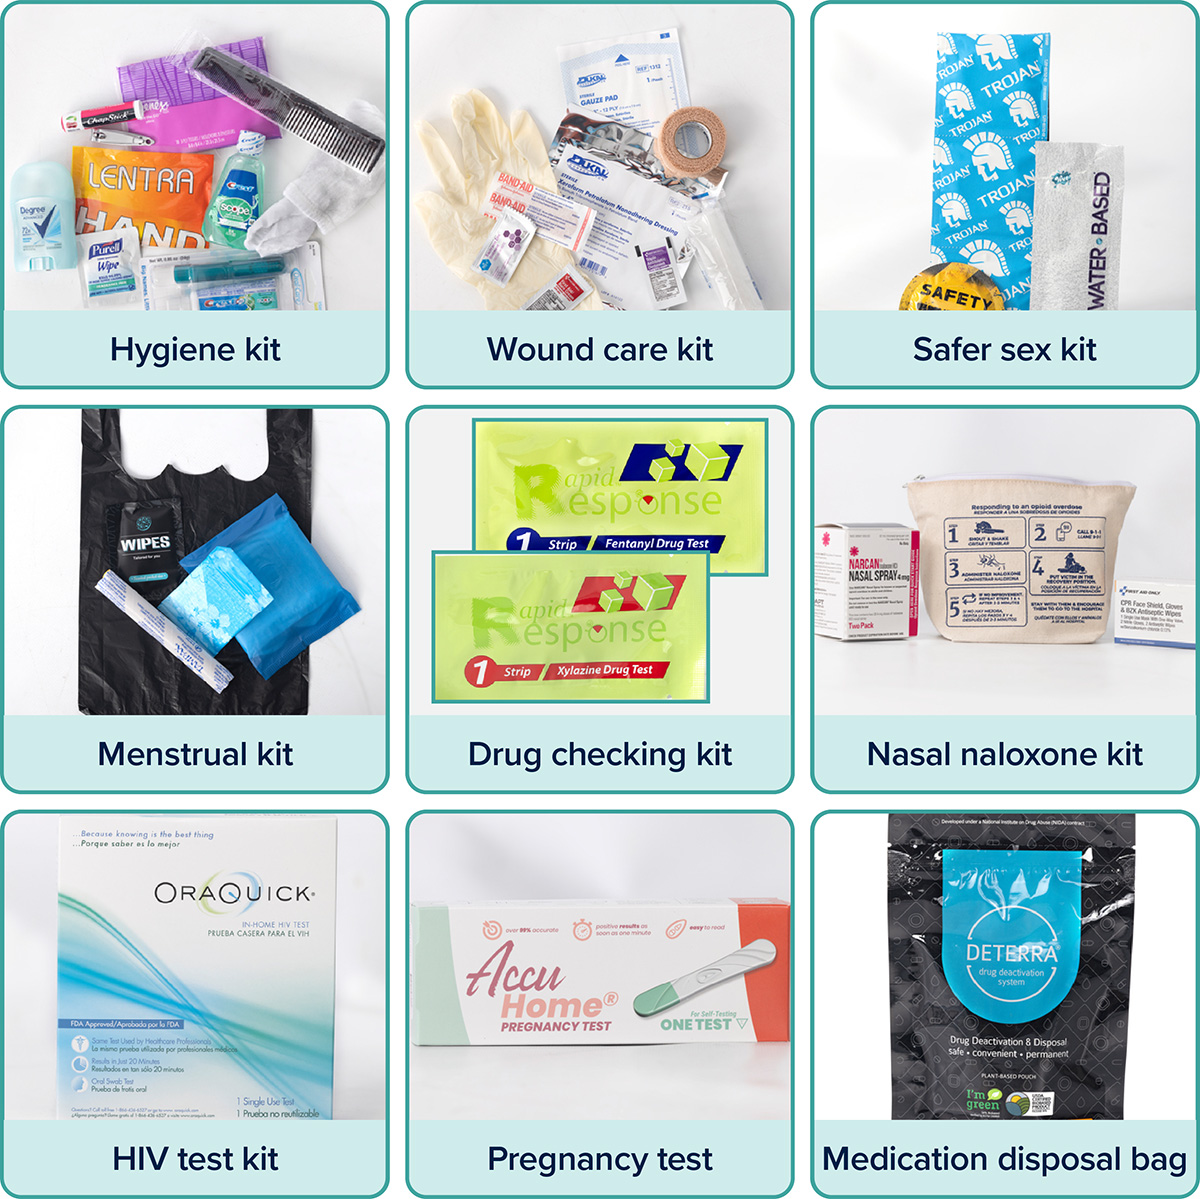 Product images of a hygiene kit, would care kit, safer sex kit, menstrual kit, drug checking kit, nasal naloxone kit, HIV test kit, pregnancy test and medication disposal bag.